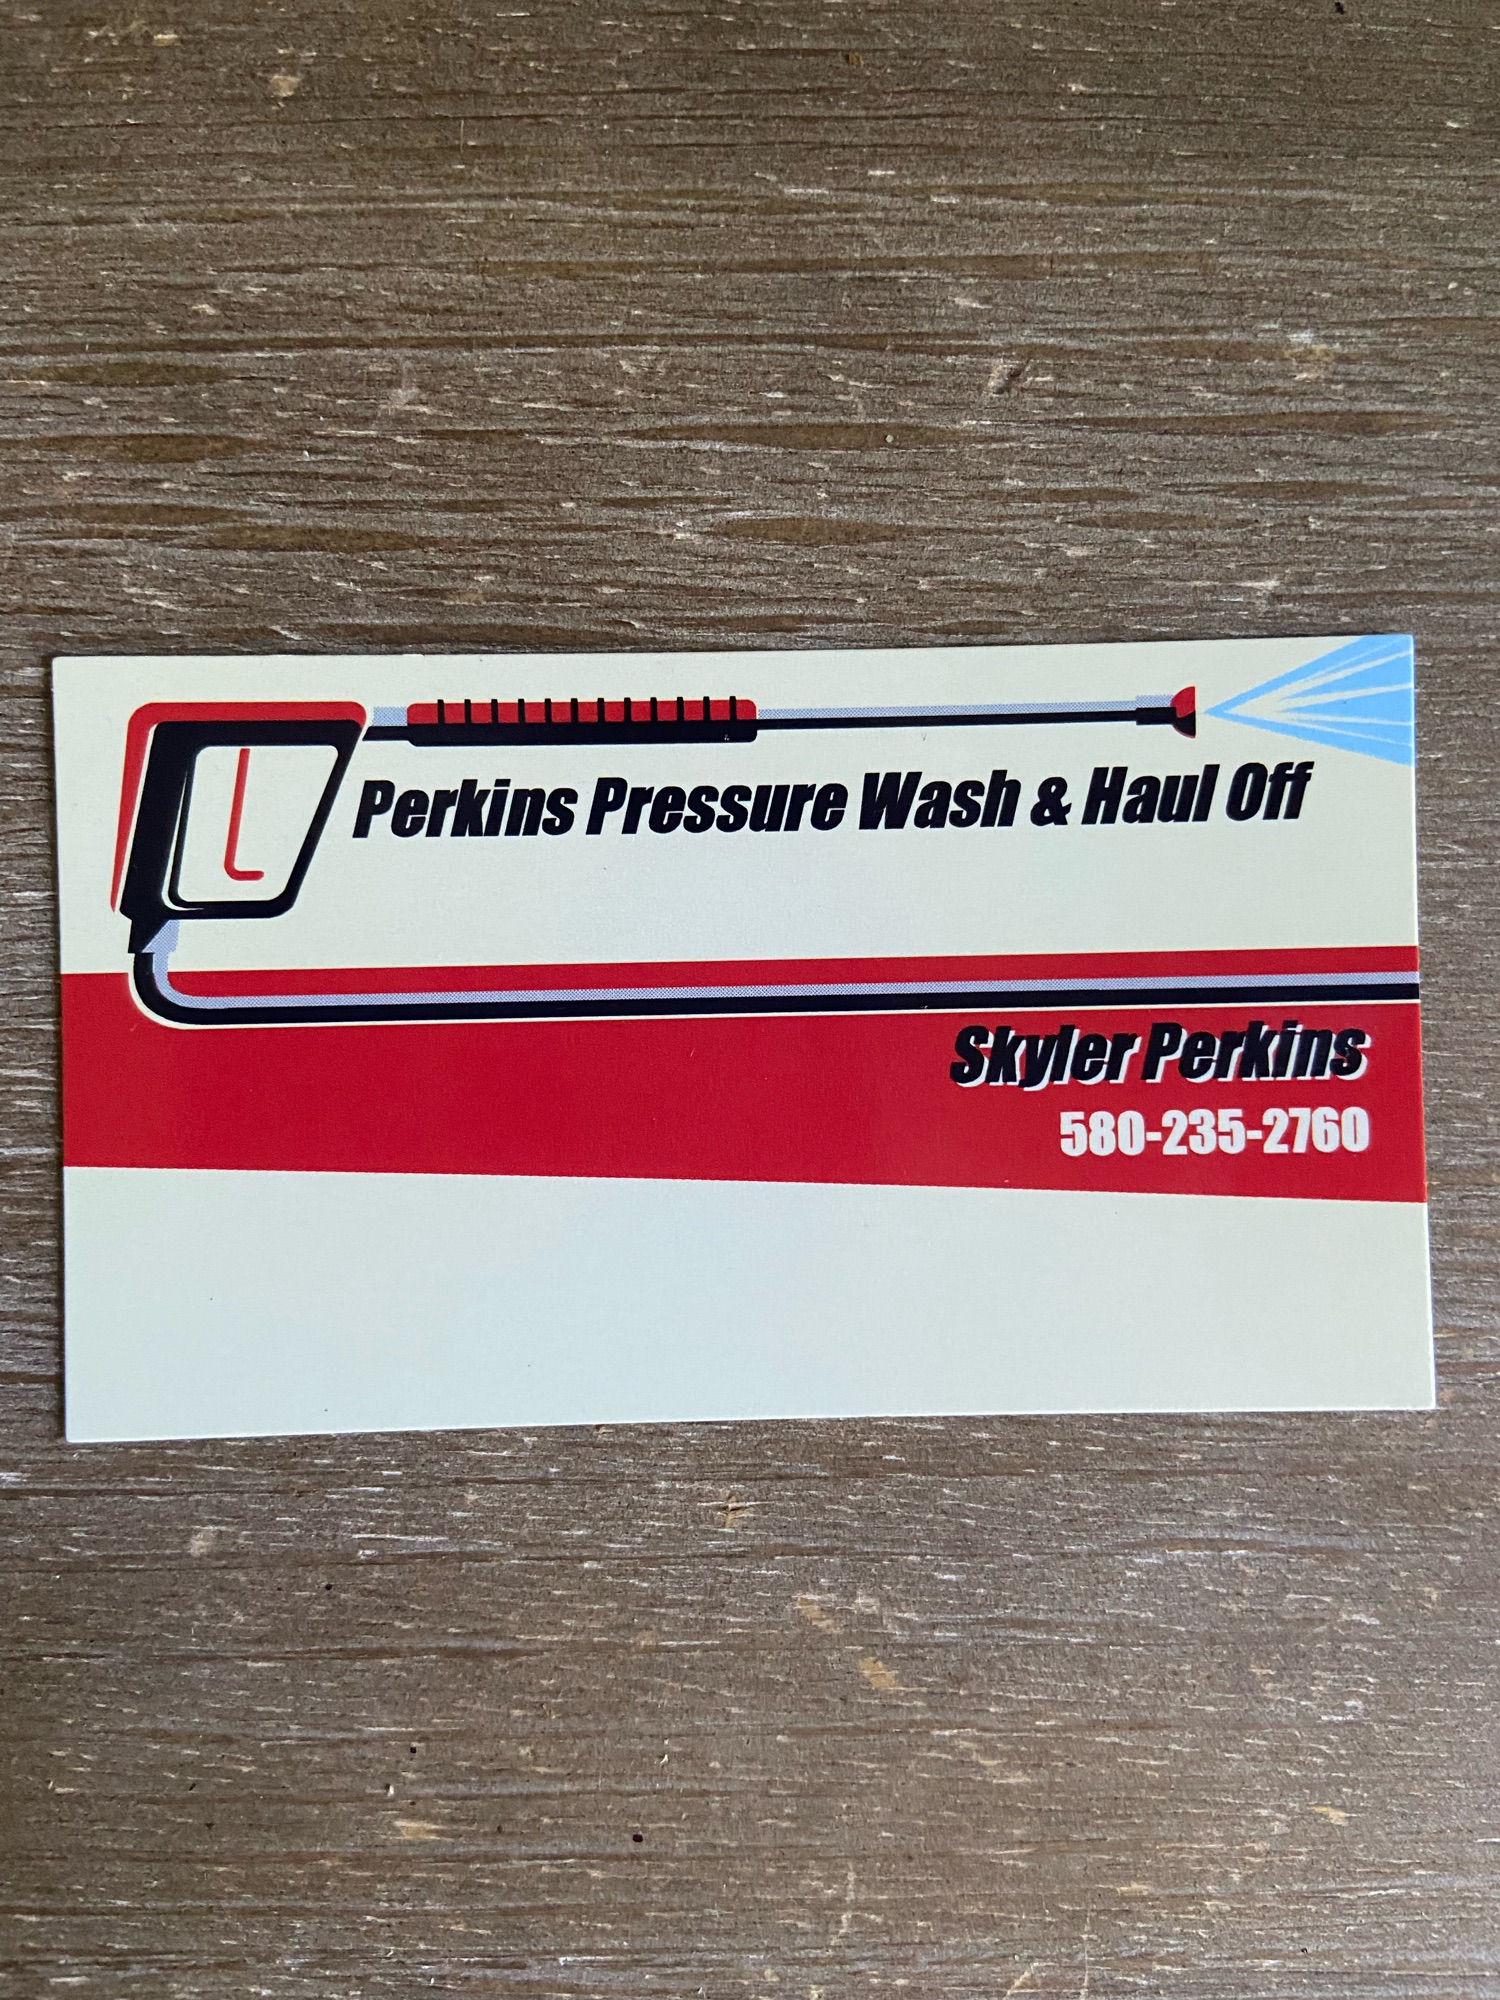 Perkins Pressure Washing and Haul Off Logo